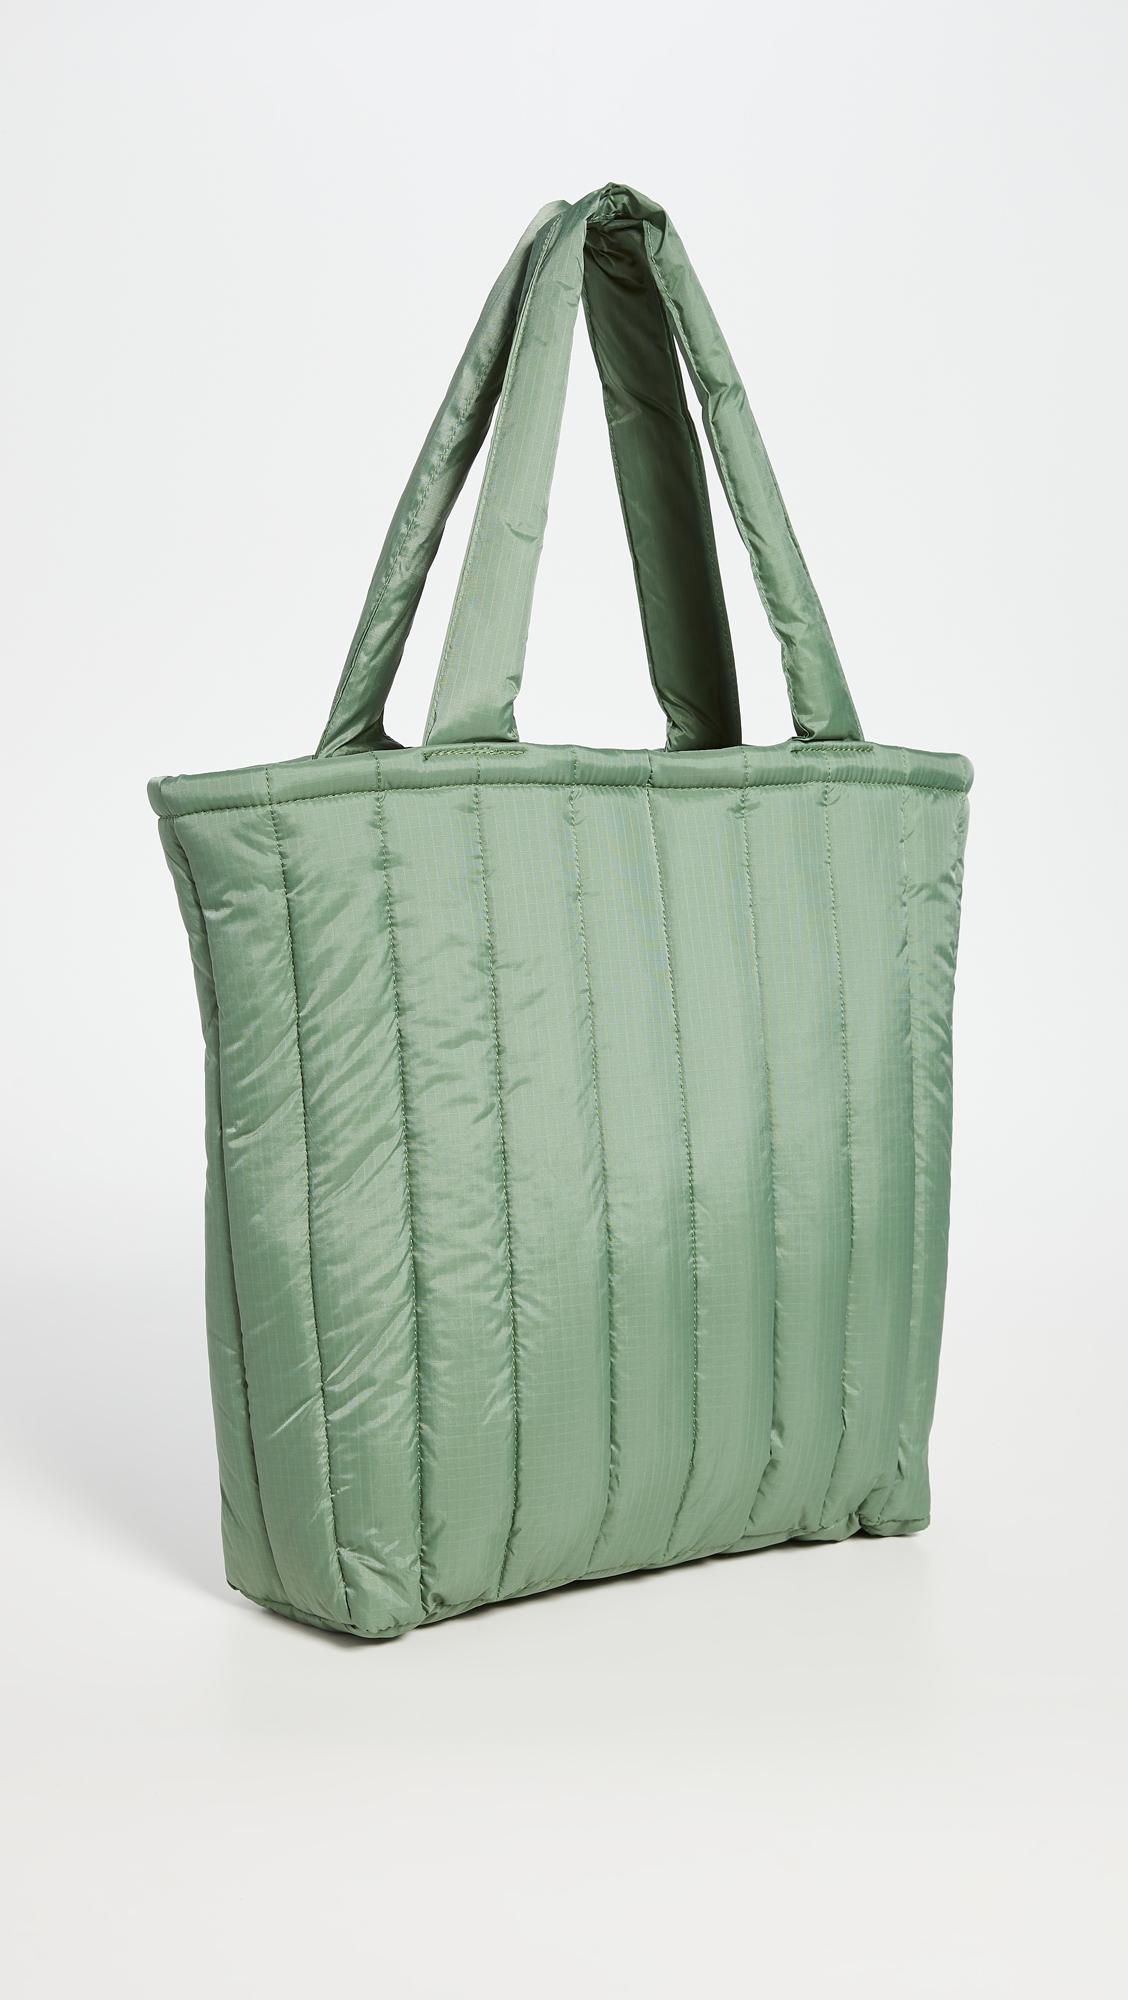 BAGGU Puffy Tote Bag in Green - Lyst